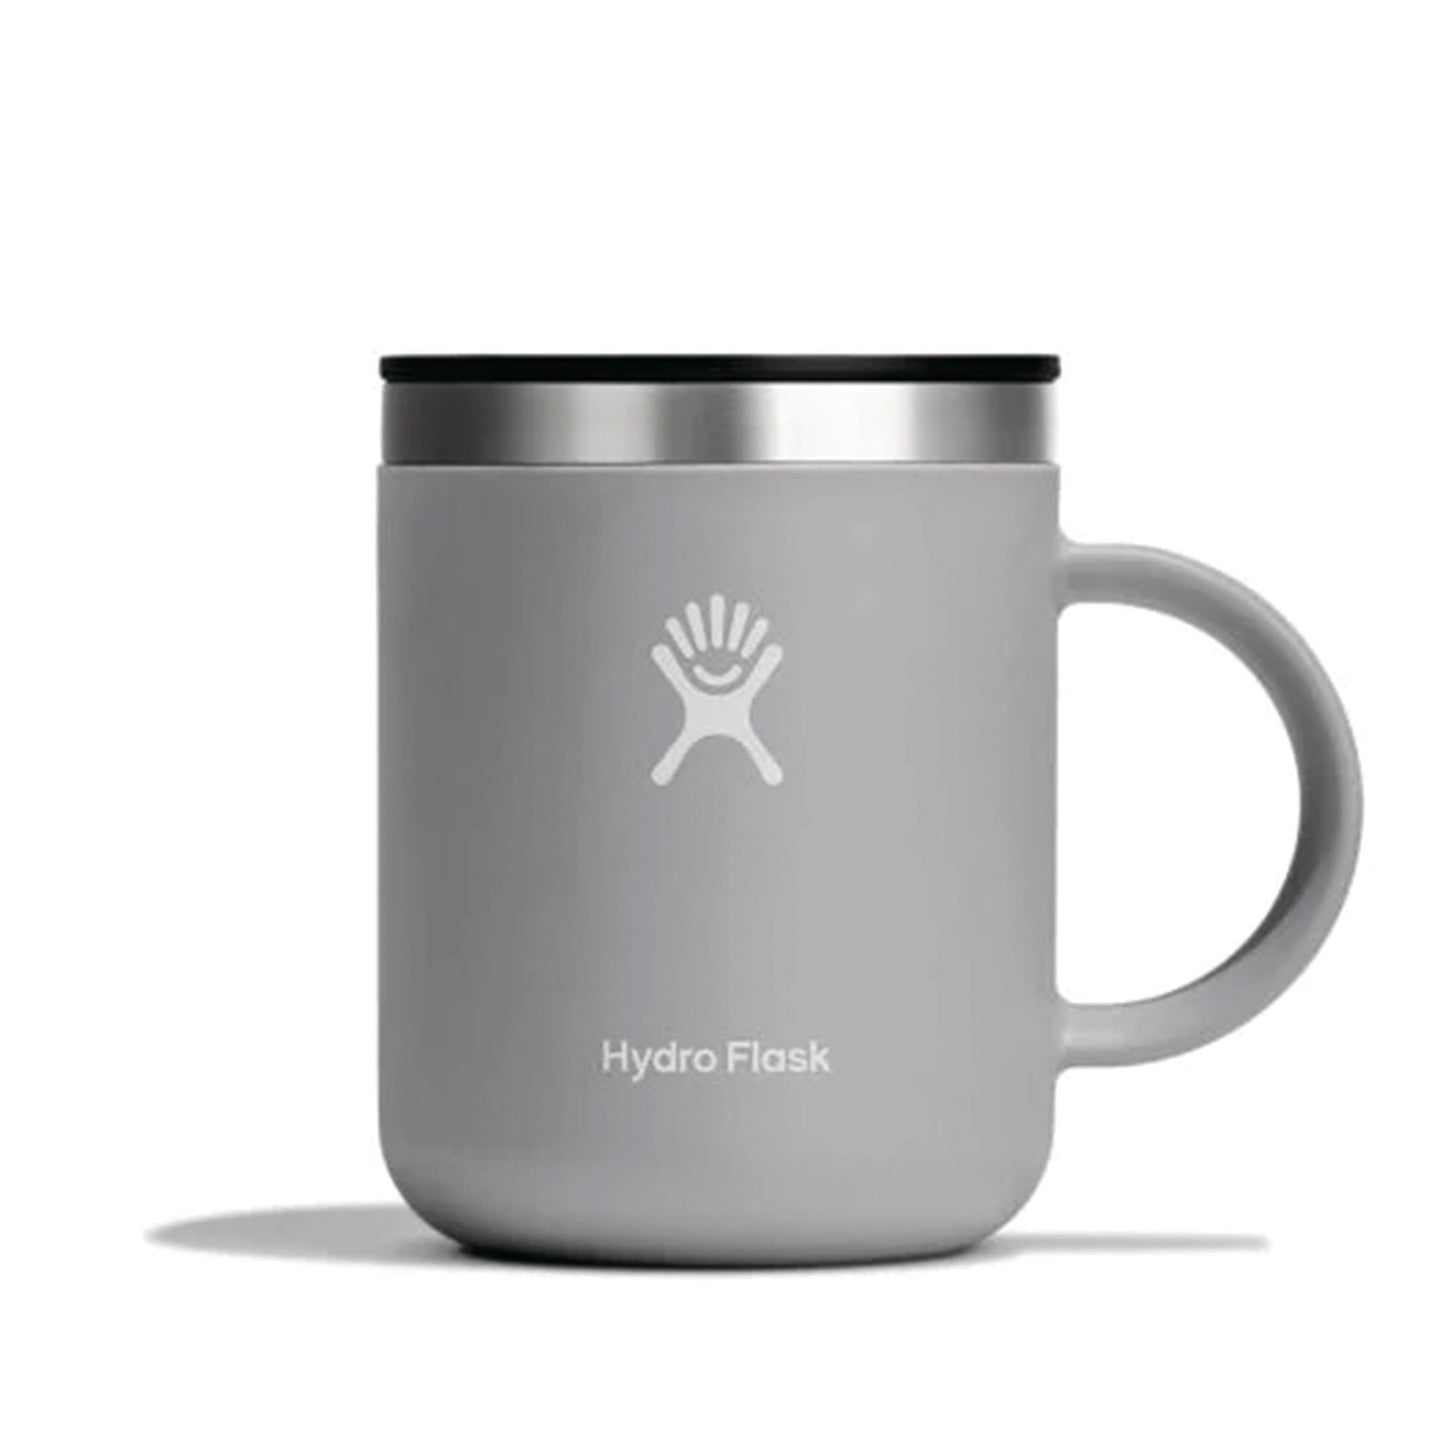 Hydro Flask | 12 oz Coffee Mug